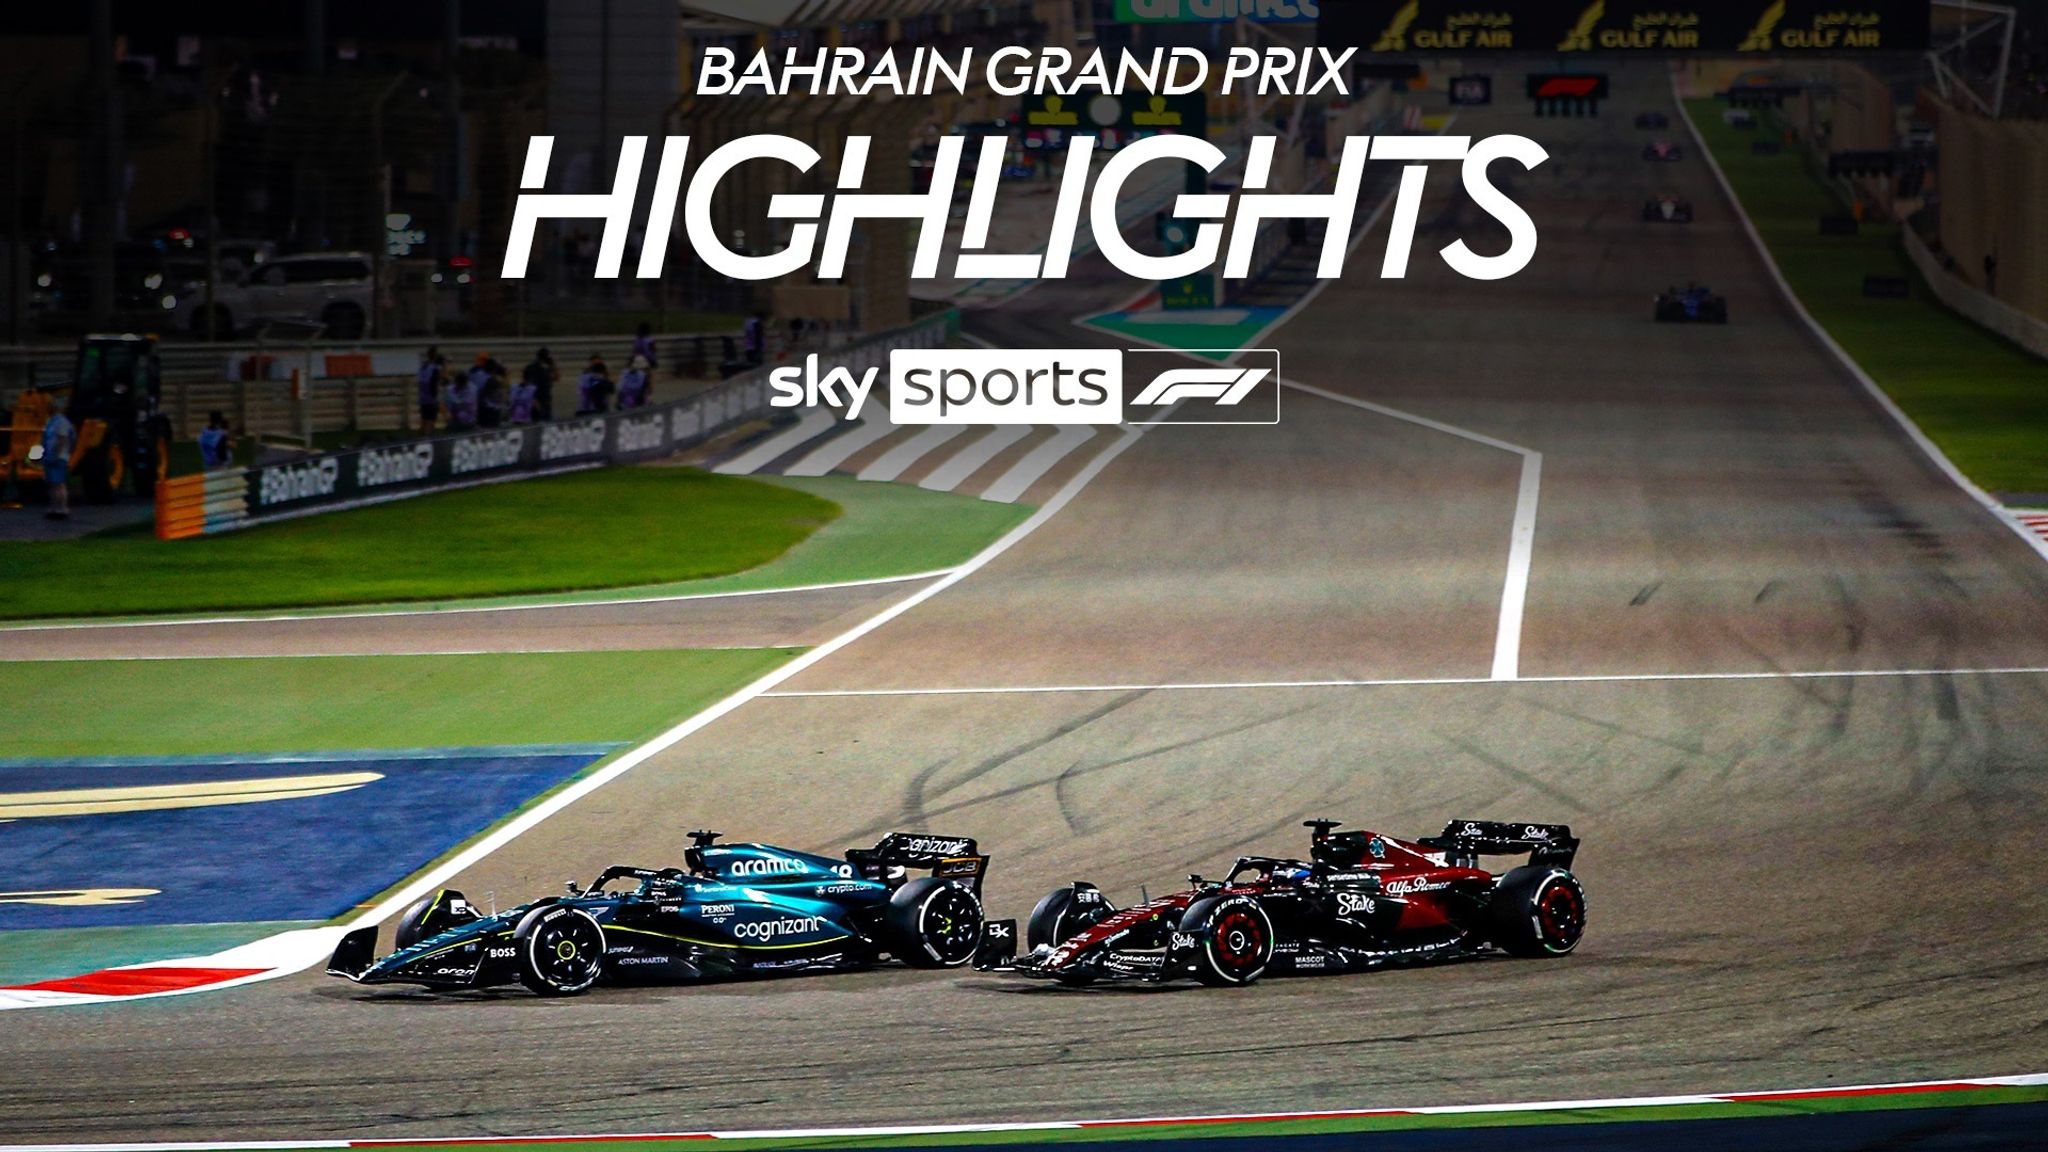 Bahrain Grand Prix Race Highlights Video Watch TV Show Sky Sports